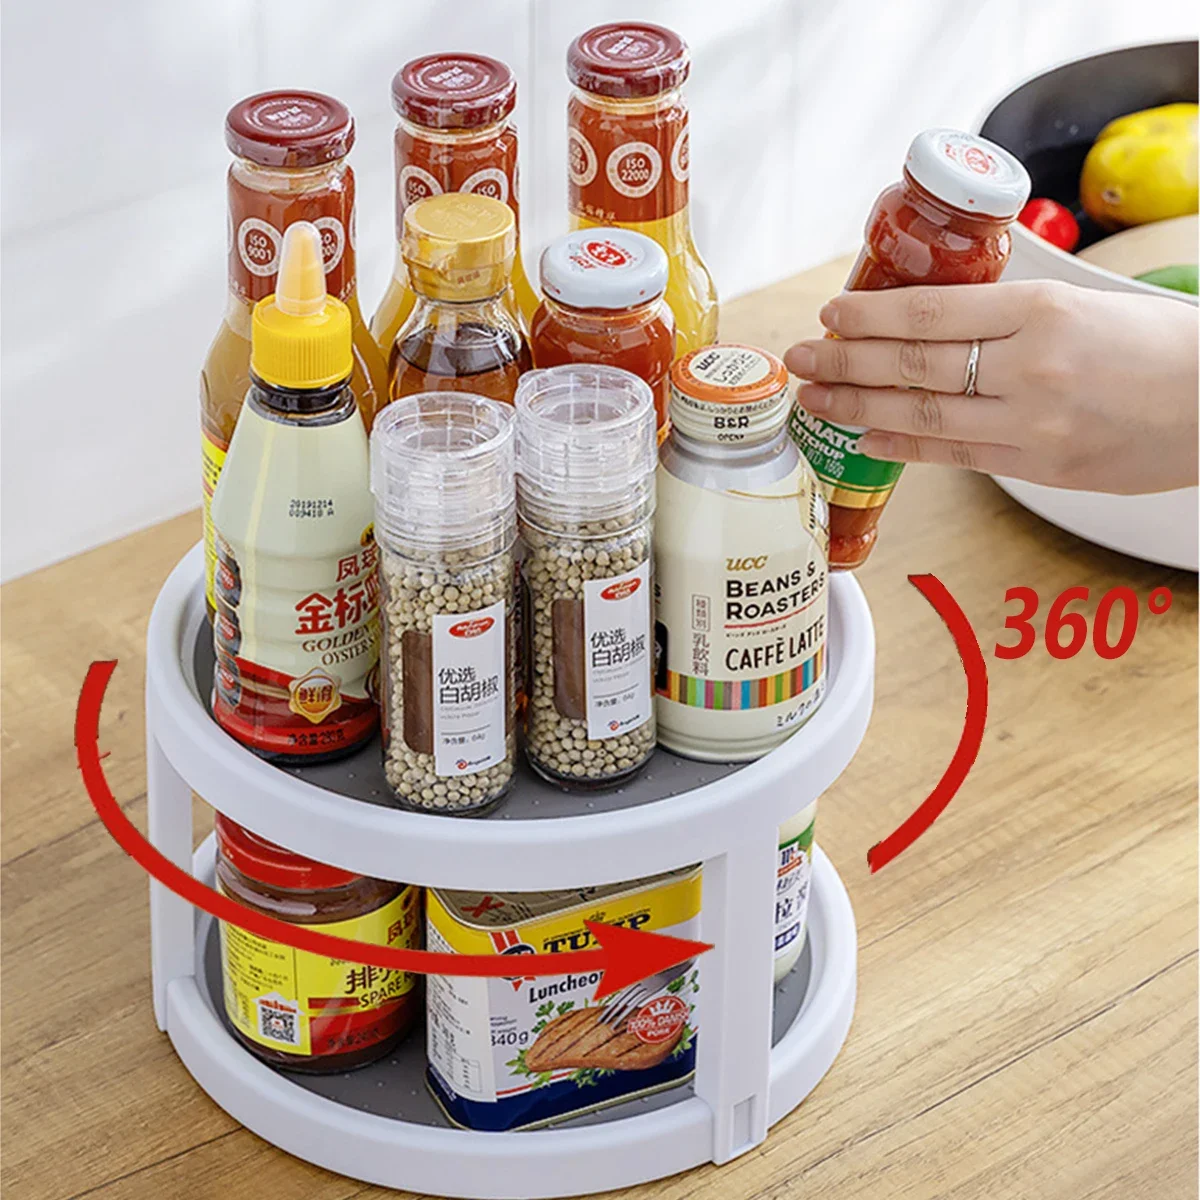 

360° Rotate Anti-slip Spice Rack Organizer Kitchen Seasoning Holder Turntable Storage Tray Lazy Home Supply for Bathroom Cabinet